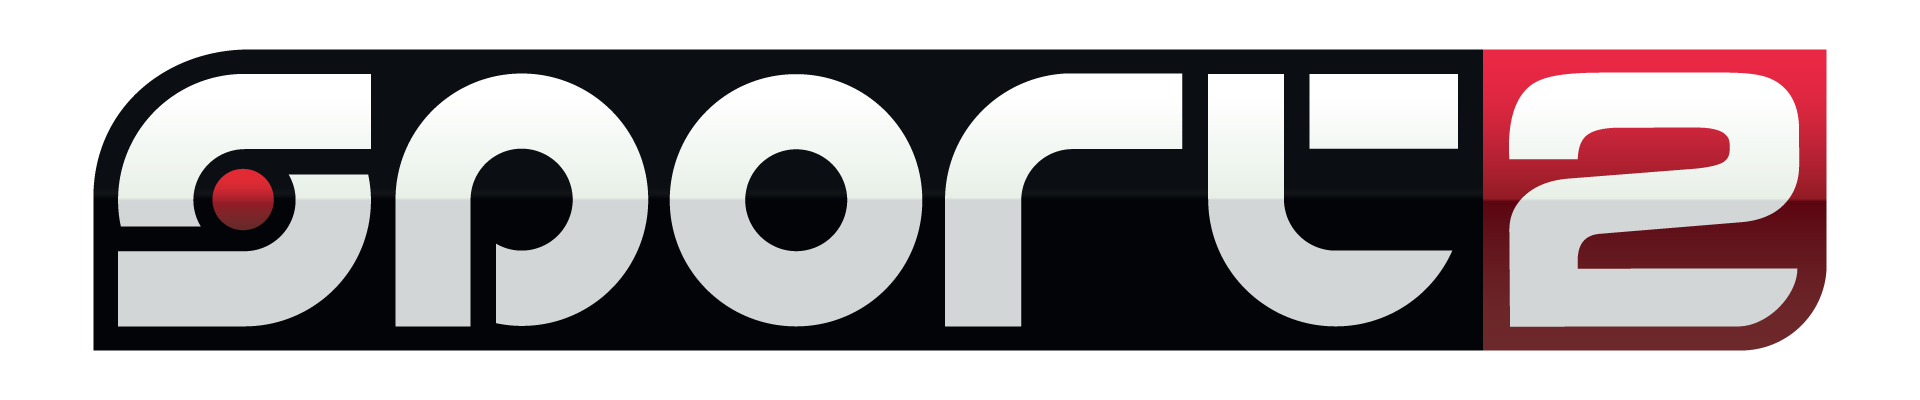 Спорт ТВ. Sport TV logo. Sport TV 2.